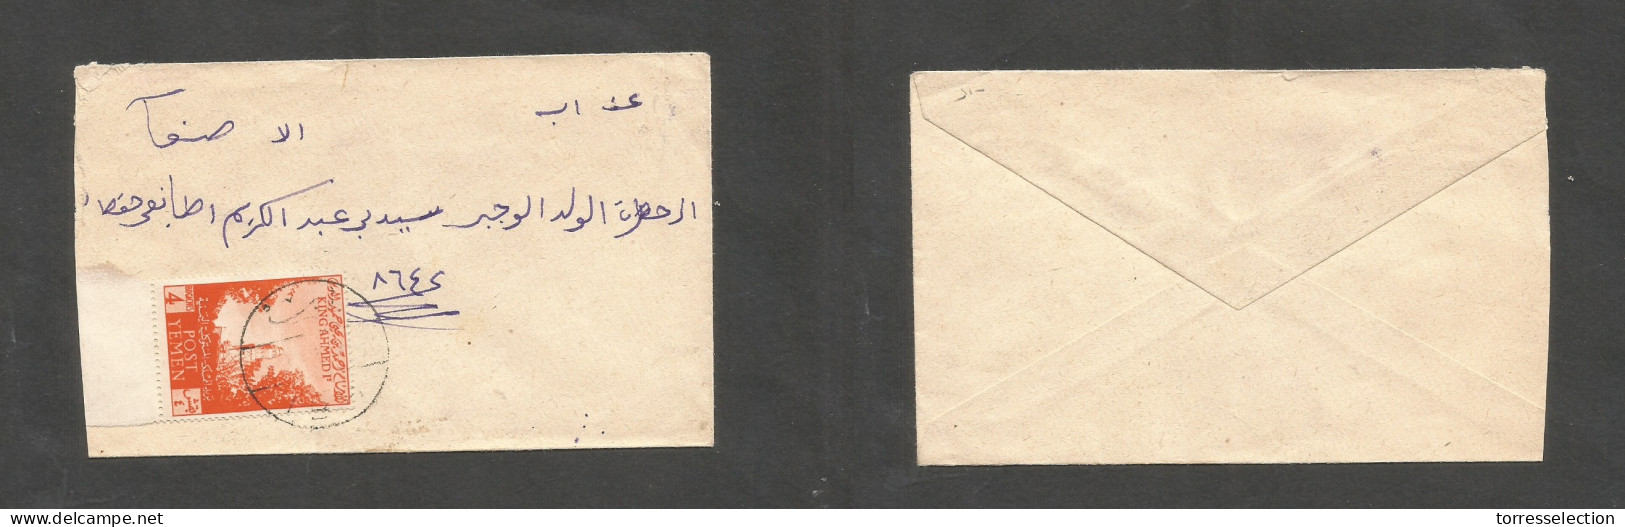 YEMEN. C. 1950s. Ibido Local Usage. Fkd 4 Bos Orange Envelope, Tied Bilingual Cds. SALE. - Jemen